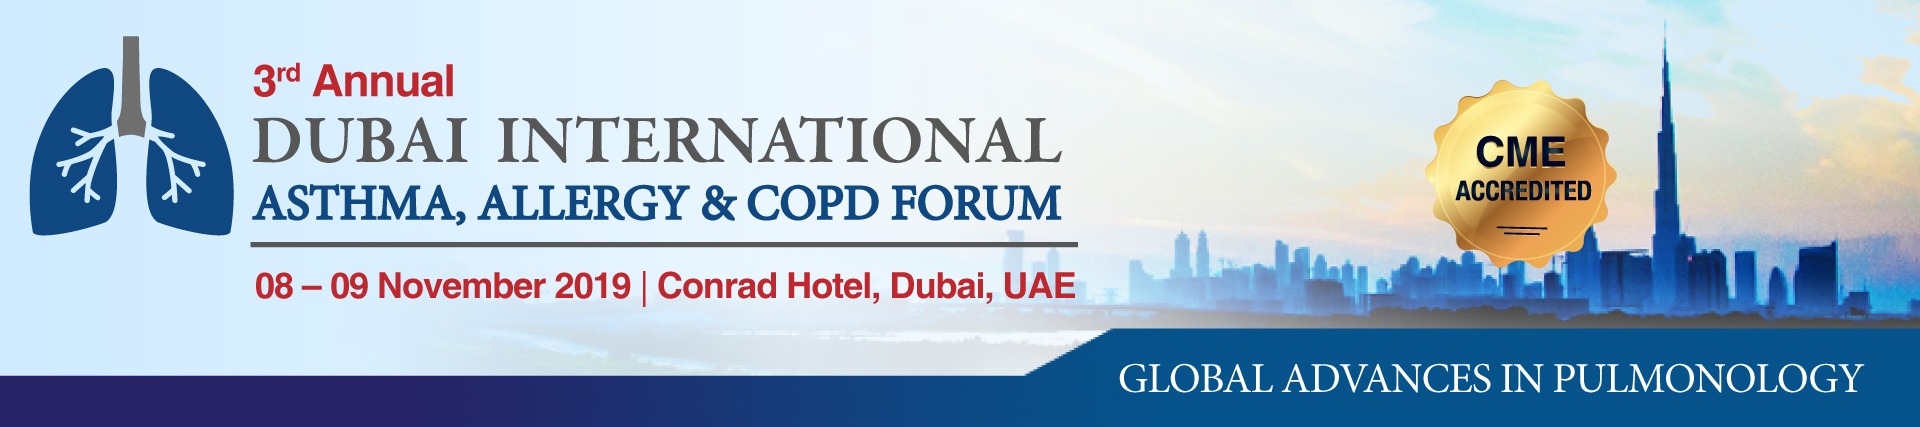 3rd Annual Dubai International Asthma, Allergy & COPD Forum - Coming Soon in UAE